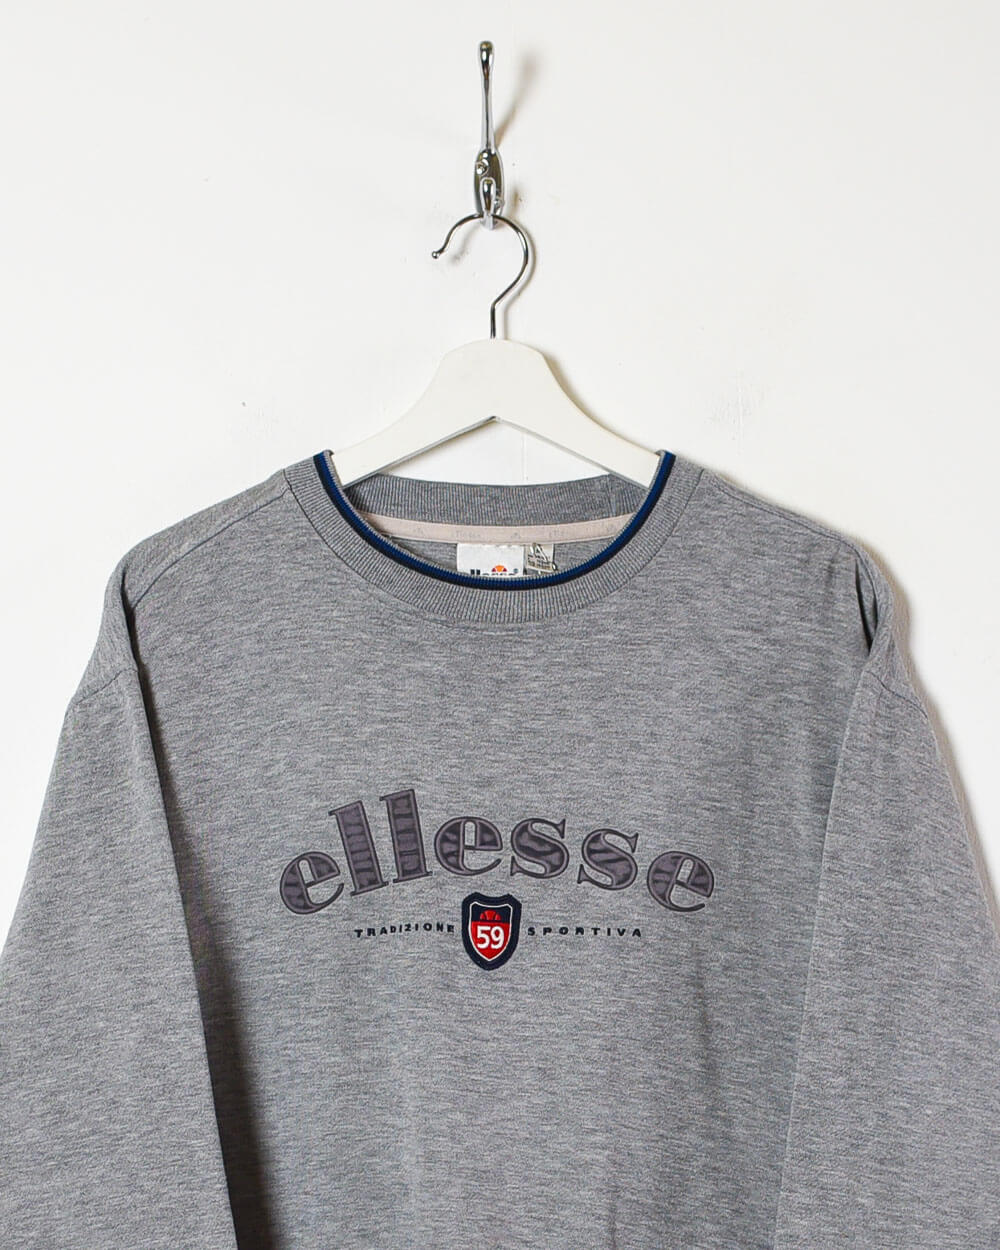 Stone Ellesse Sweatshirt - Small